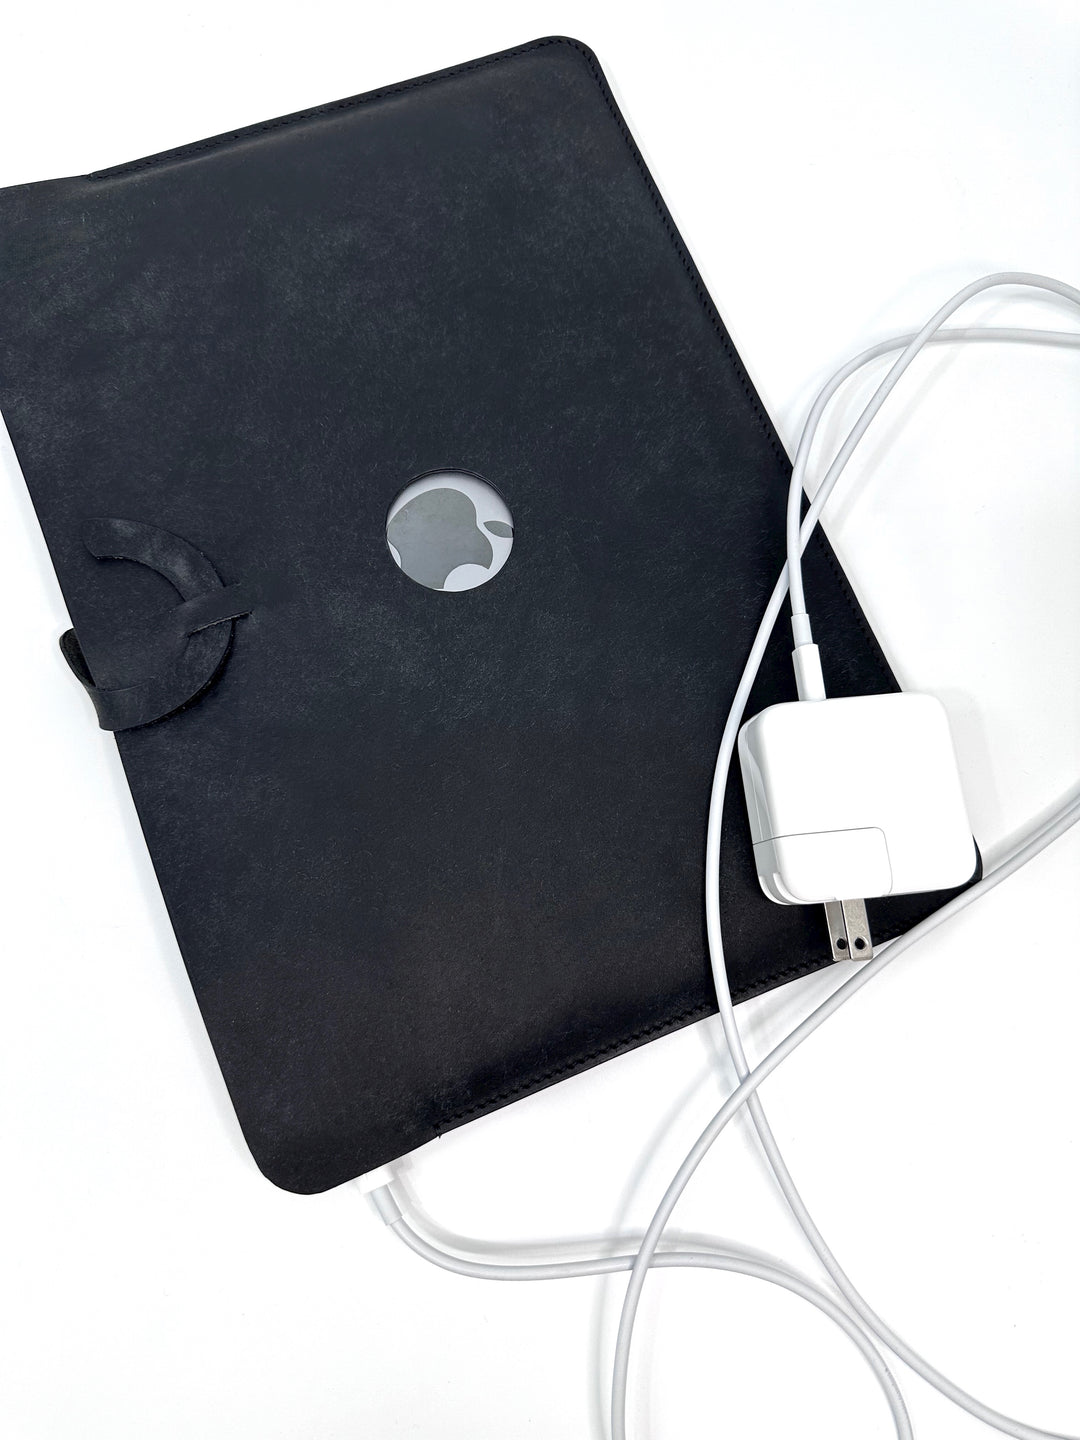 MacBook Case "Pueblo Antique Black"